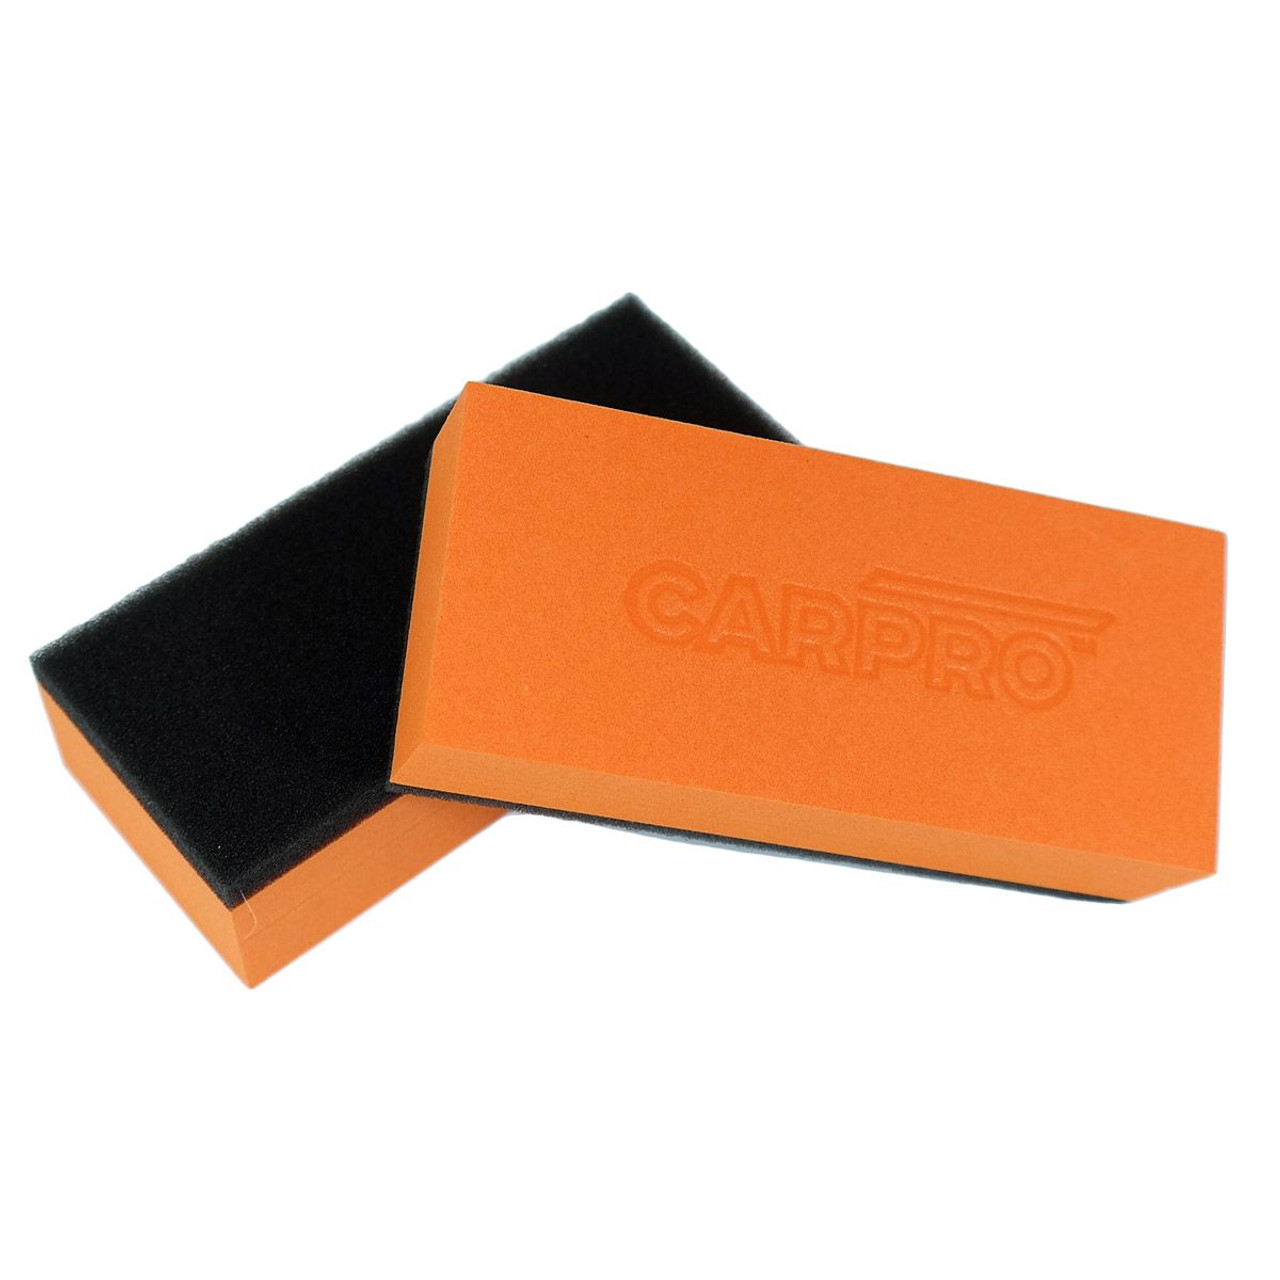 CQUARTZ Microfiber Applicator (5 pack)